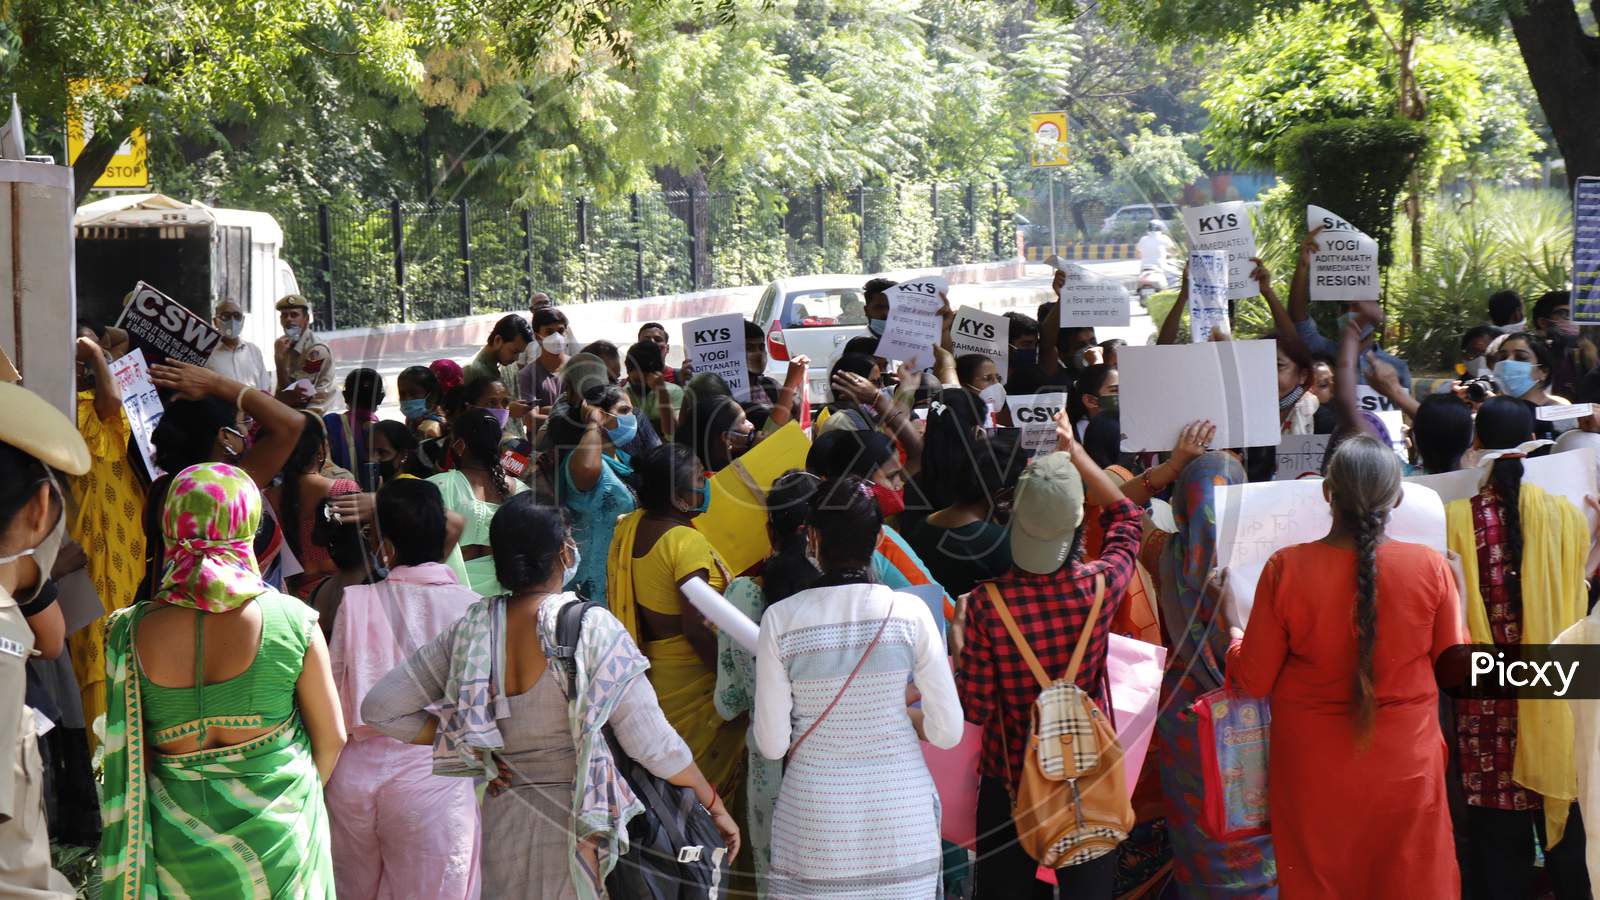 Women protest demanding justice for Hathras gang-rape victim, at Jantar Mantar, on October 2, 2020 in New Delhi, India